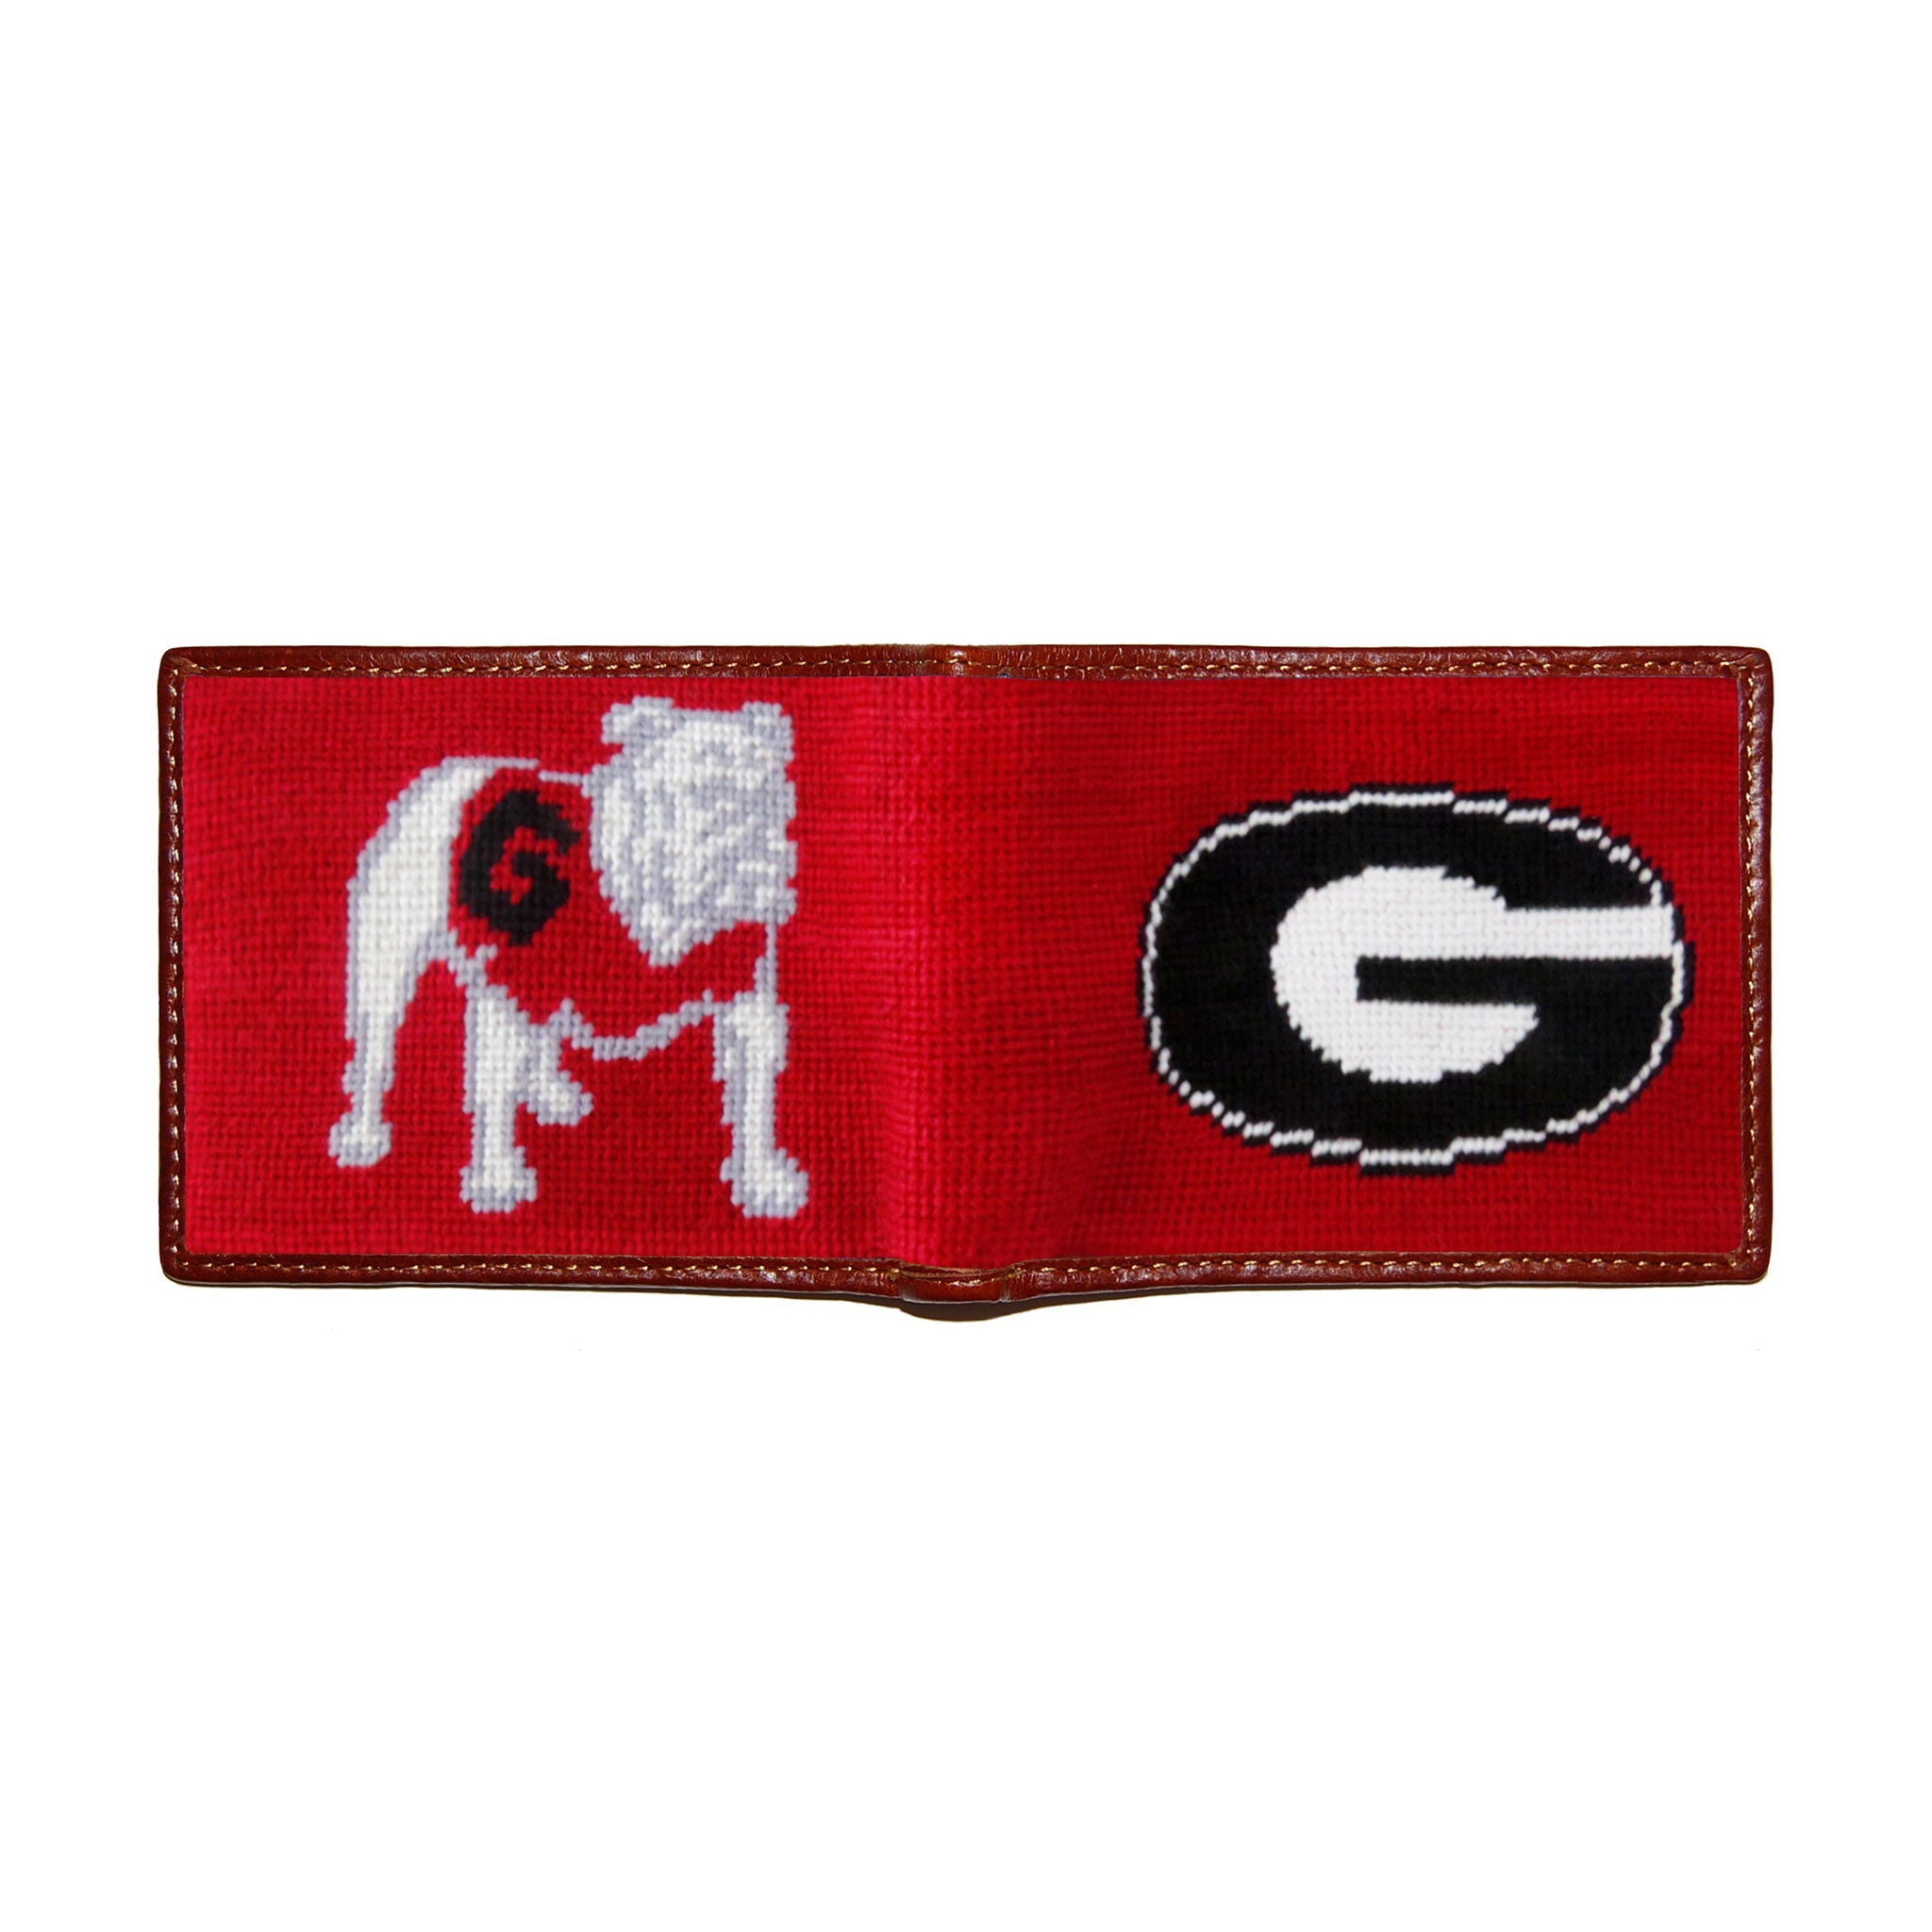 Georgia Wallet (Red)